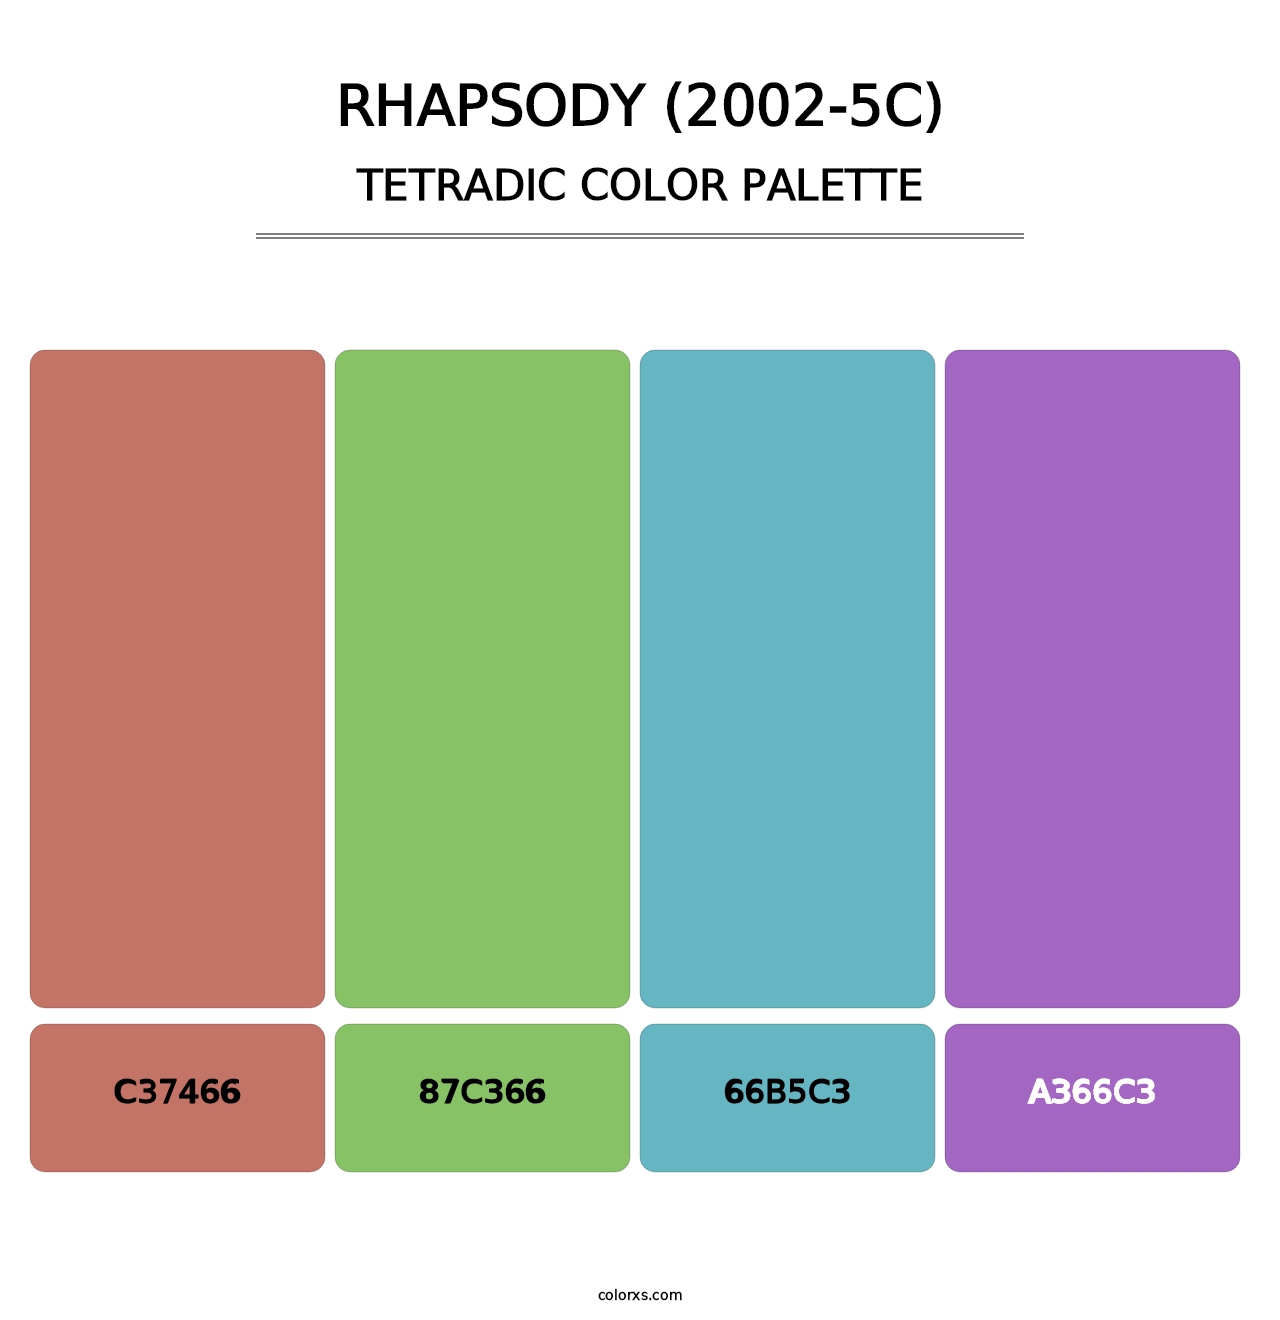 Rhapsody (2002-5C) - Tetradic Color Palette